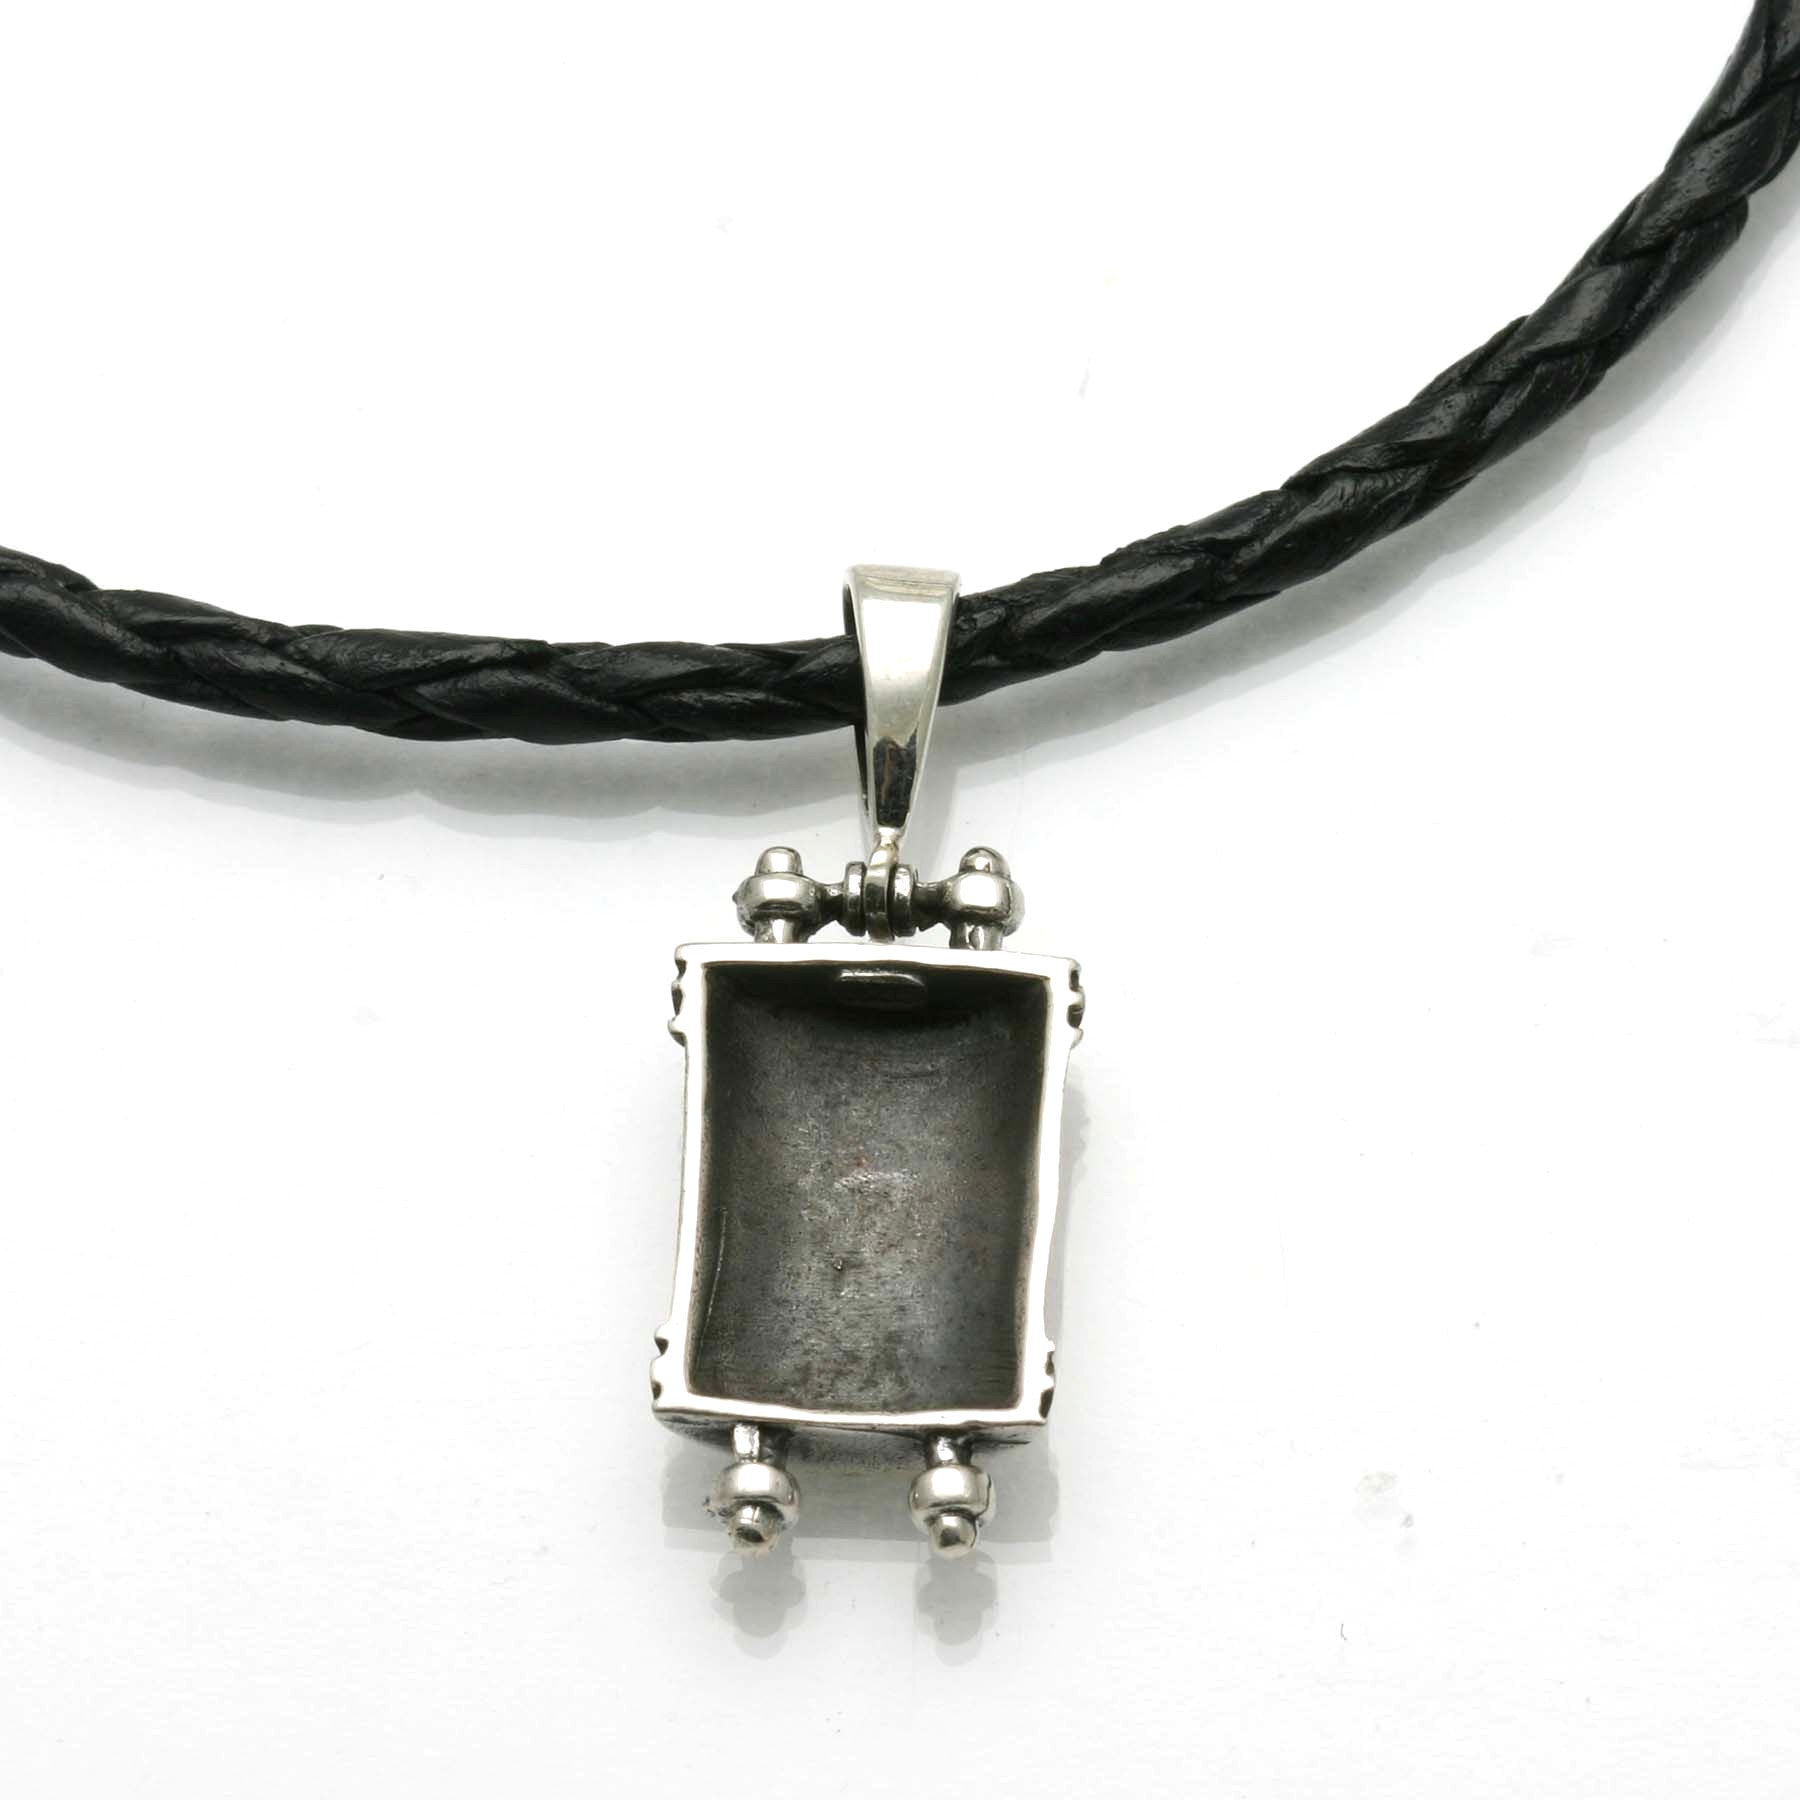 Sterling Silver Torah Star of David Black Leather Necklace - JewelryJudaica